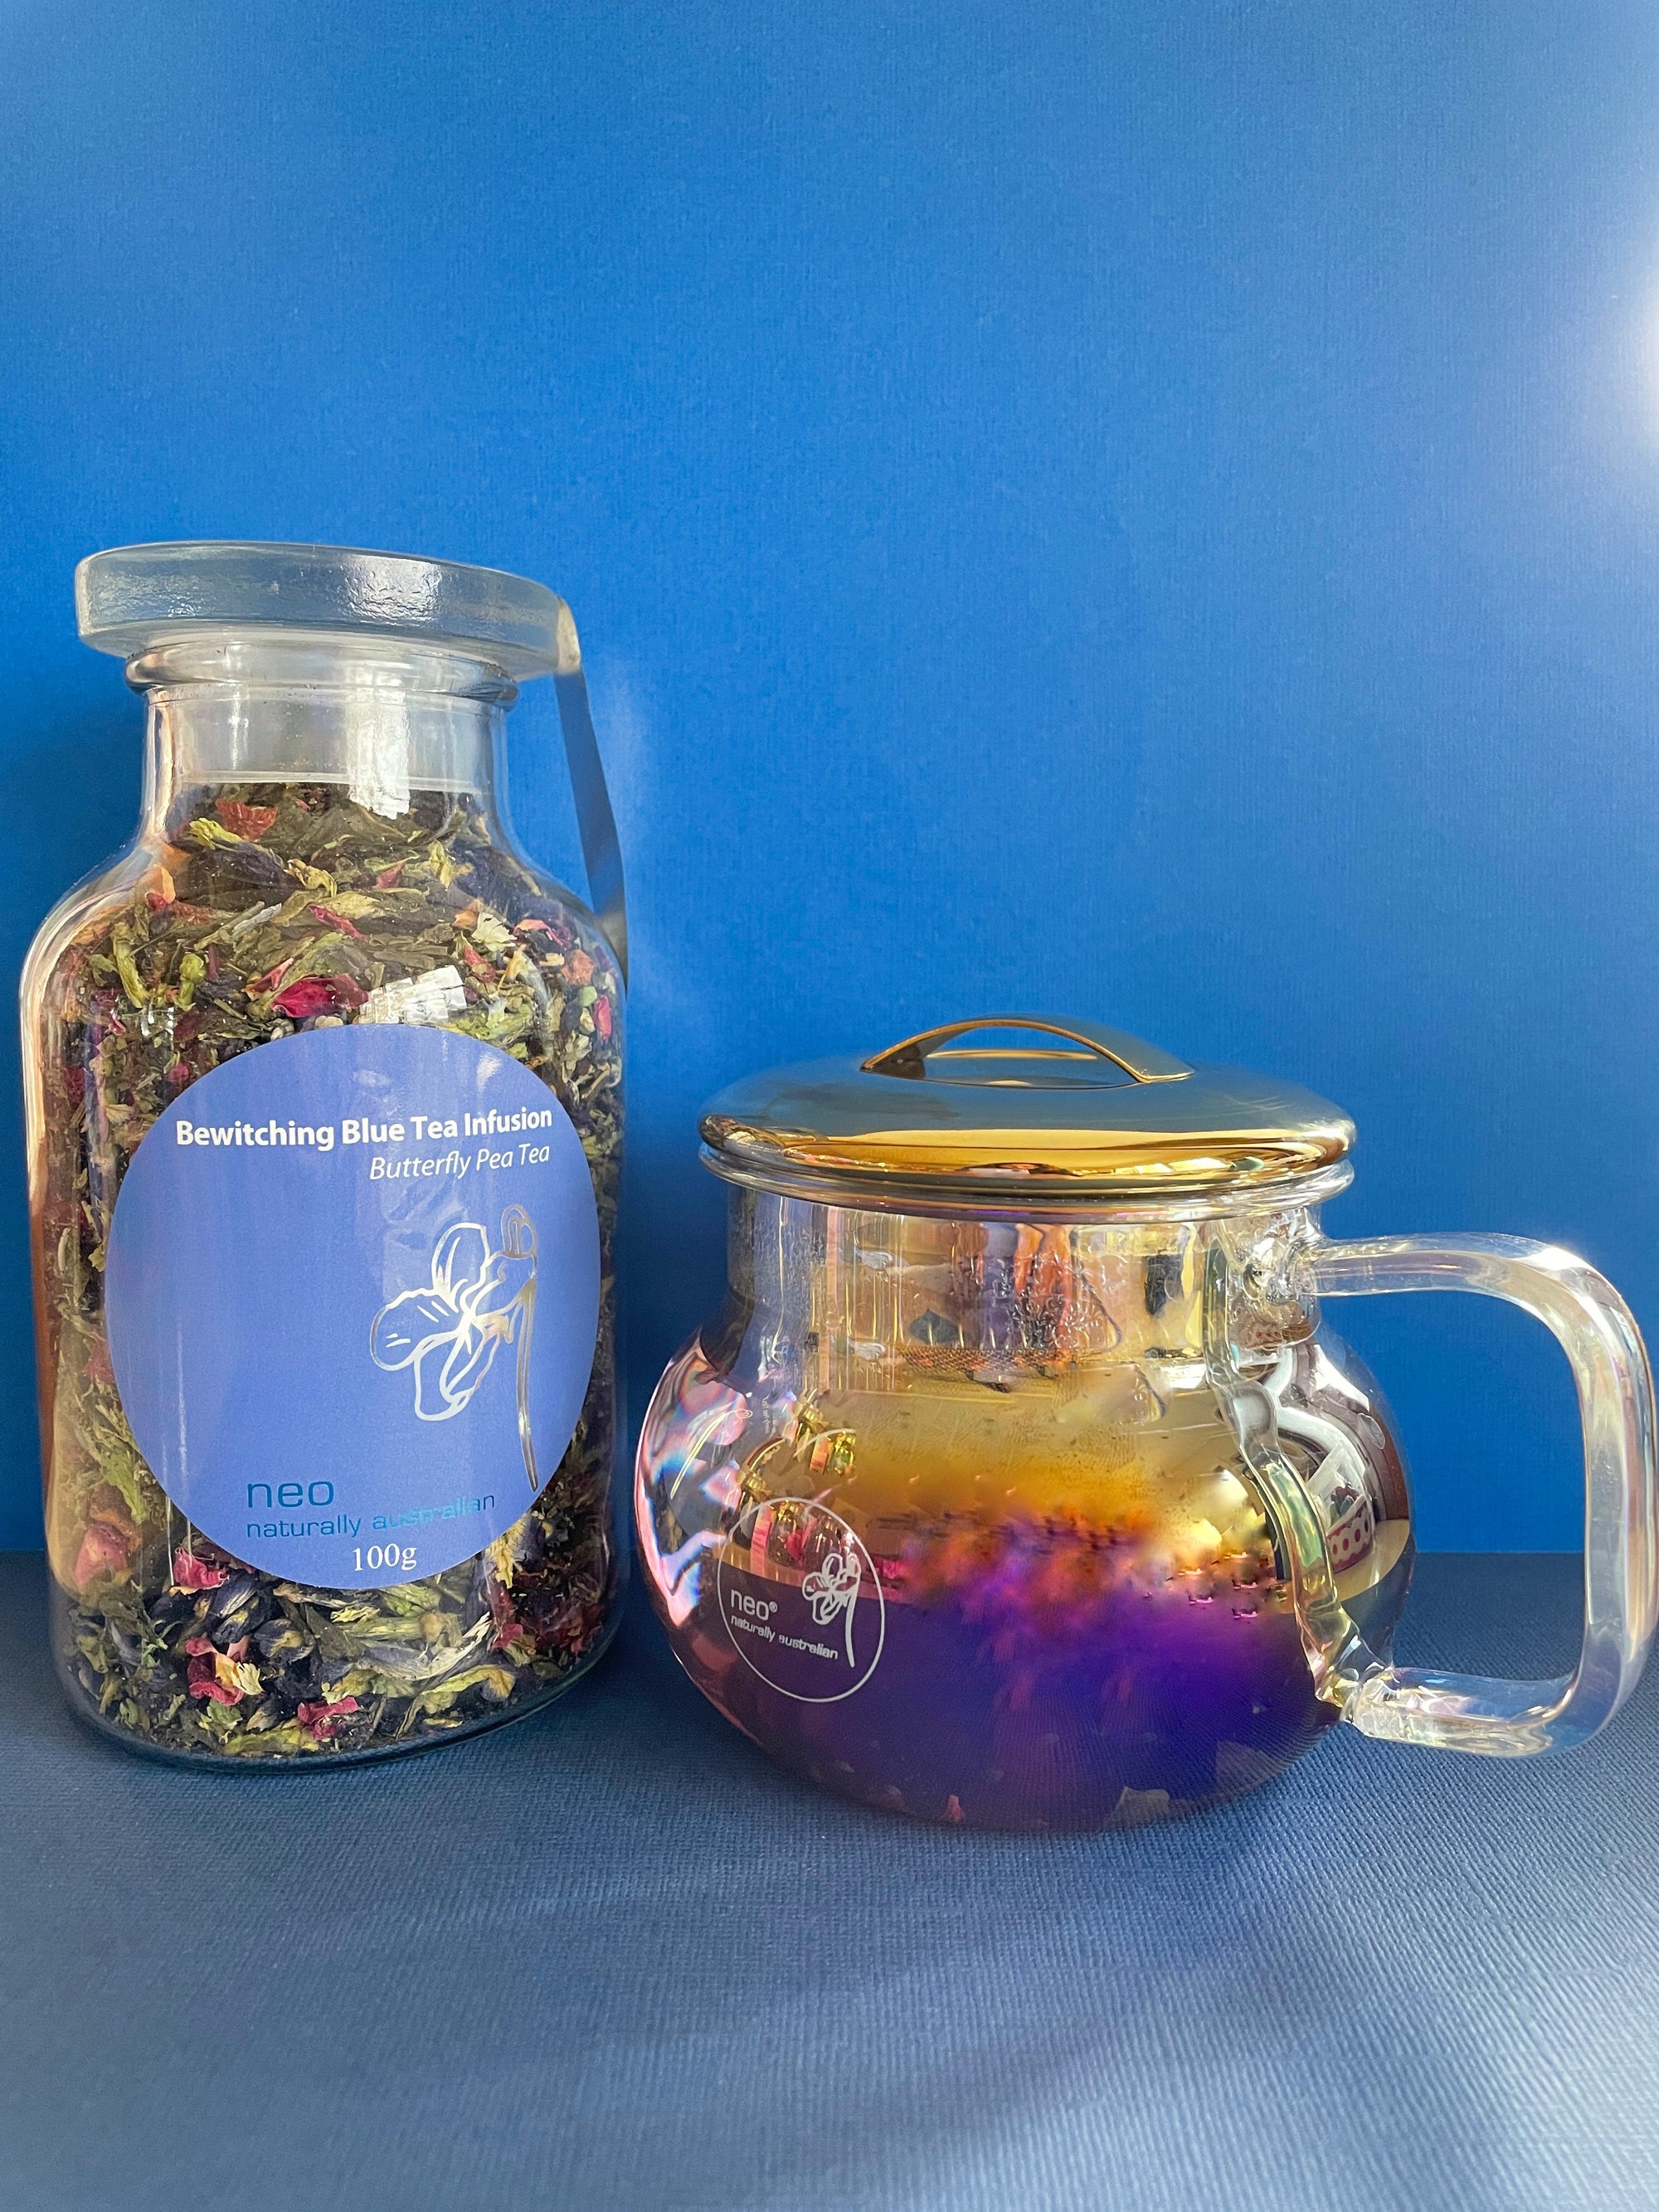 Bewitching Blue Tea & Pot Duo